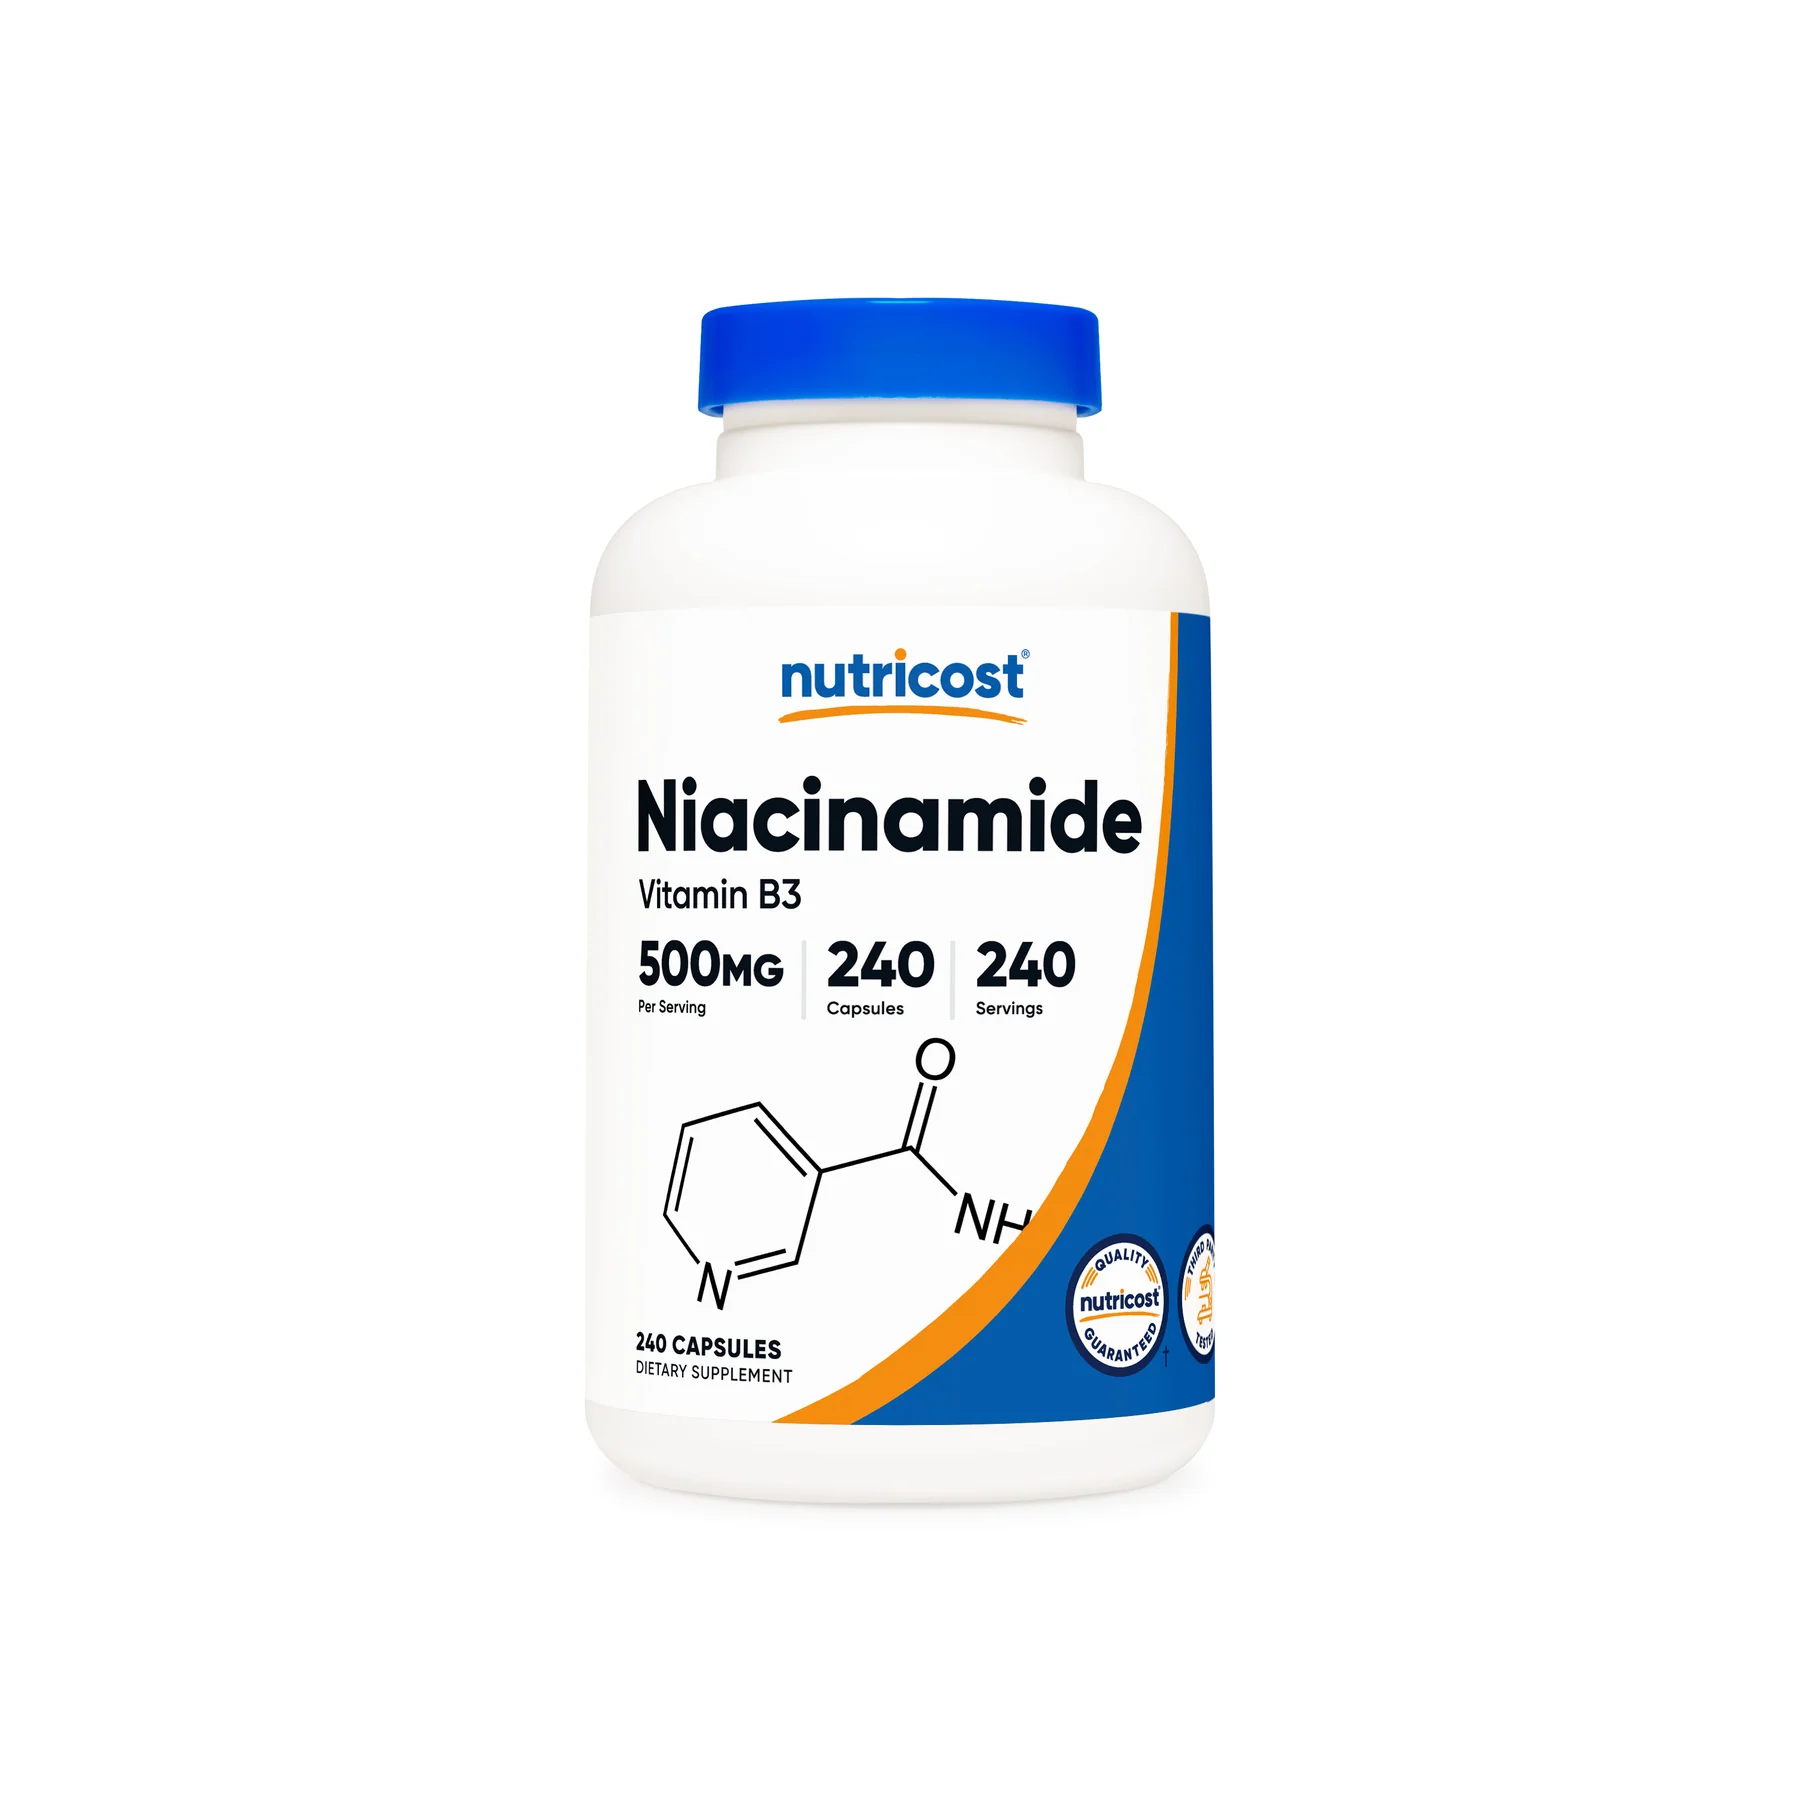 Niacinamide Vitamins Products